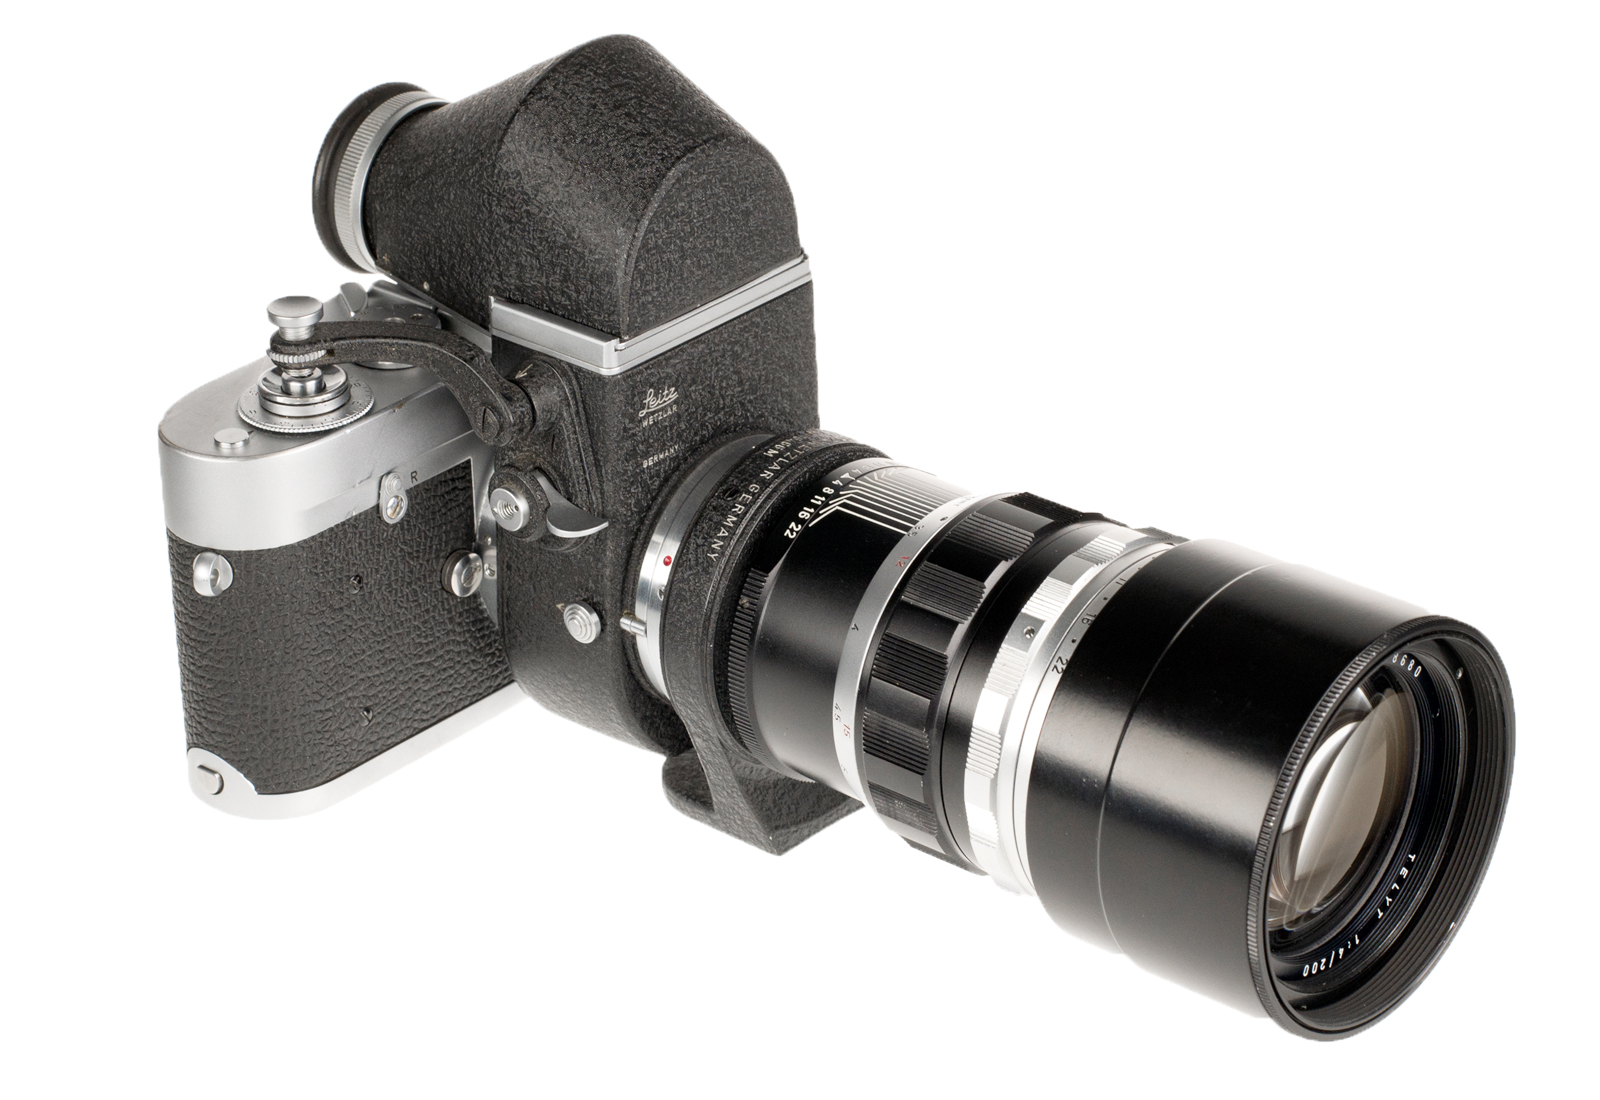 Leica MD, chrome + Telyt 1:4/200mm, black + Visoflex II